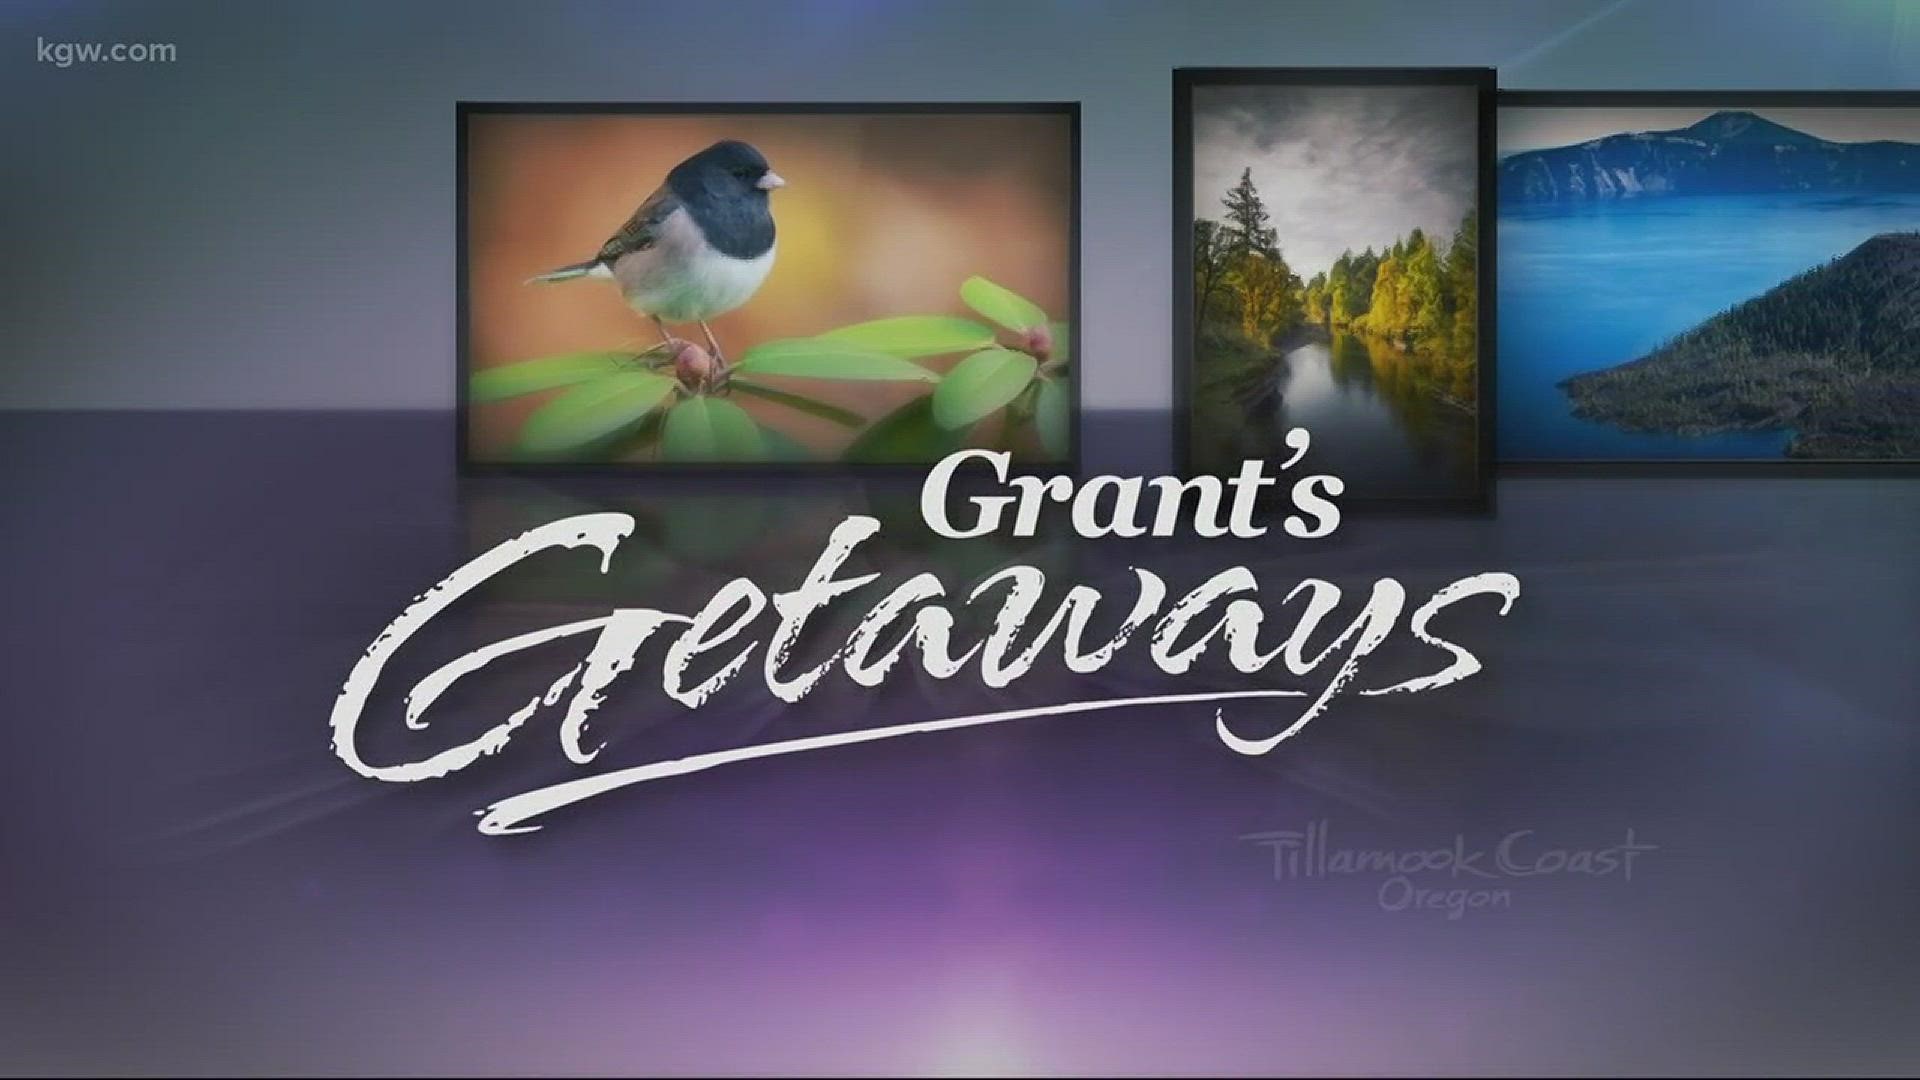 Grant's Getaways: White River